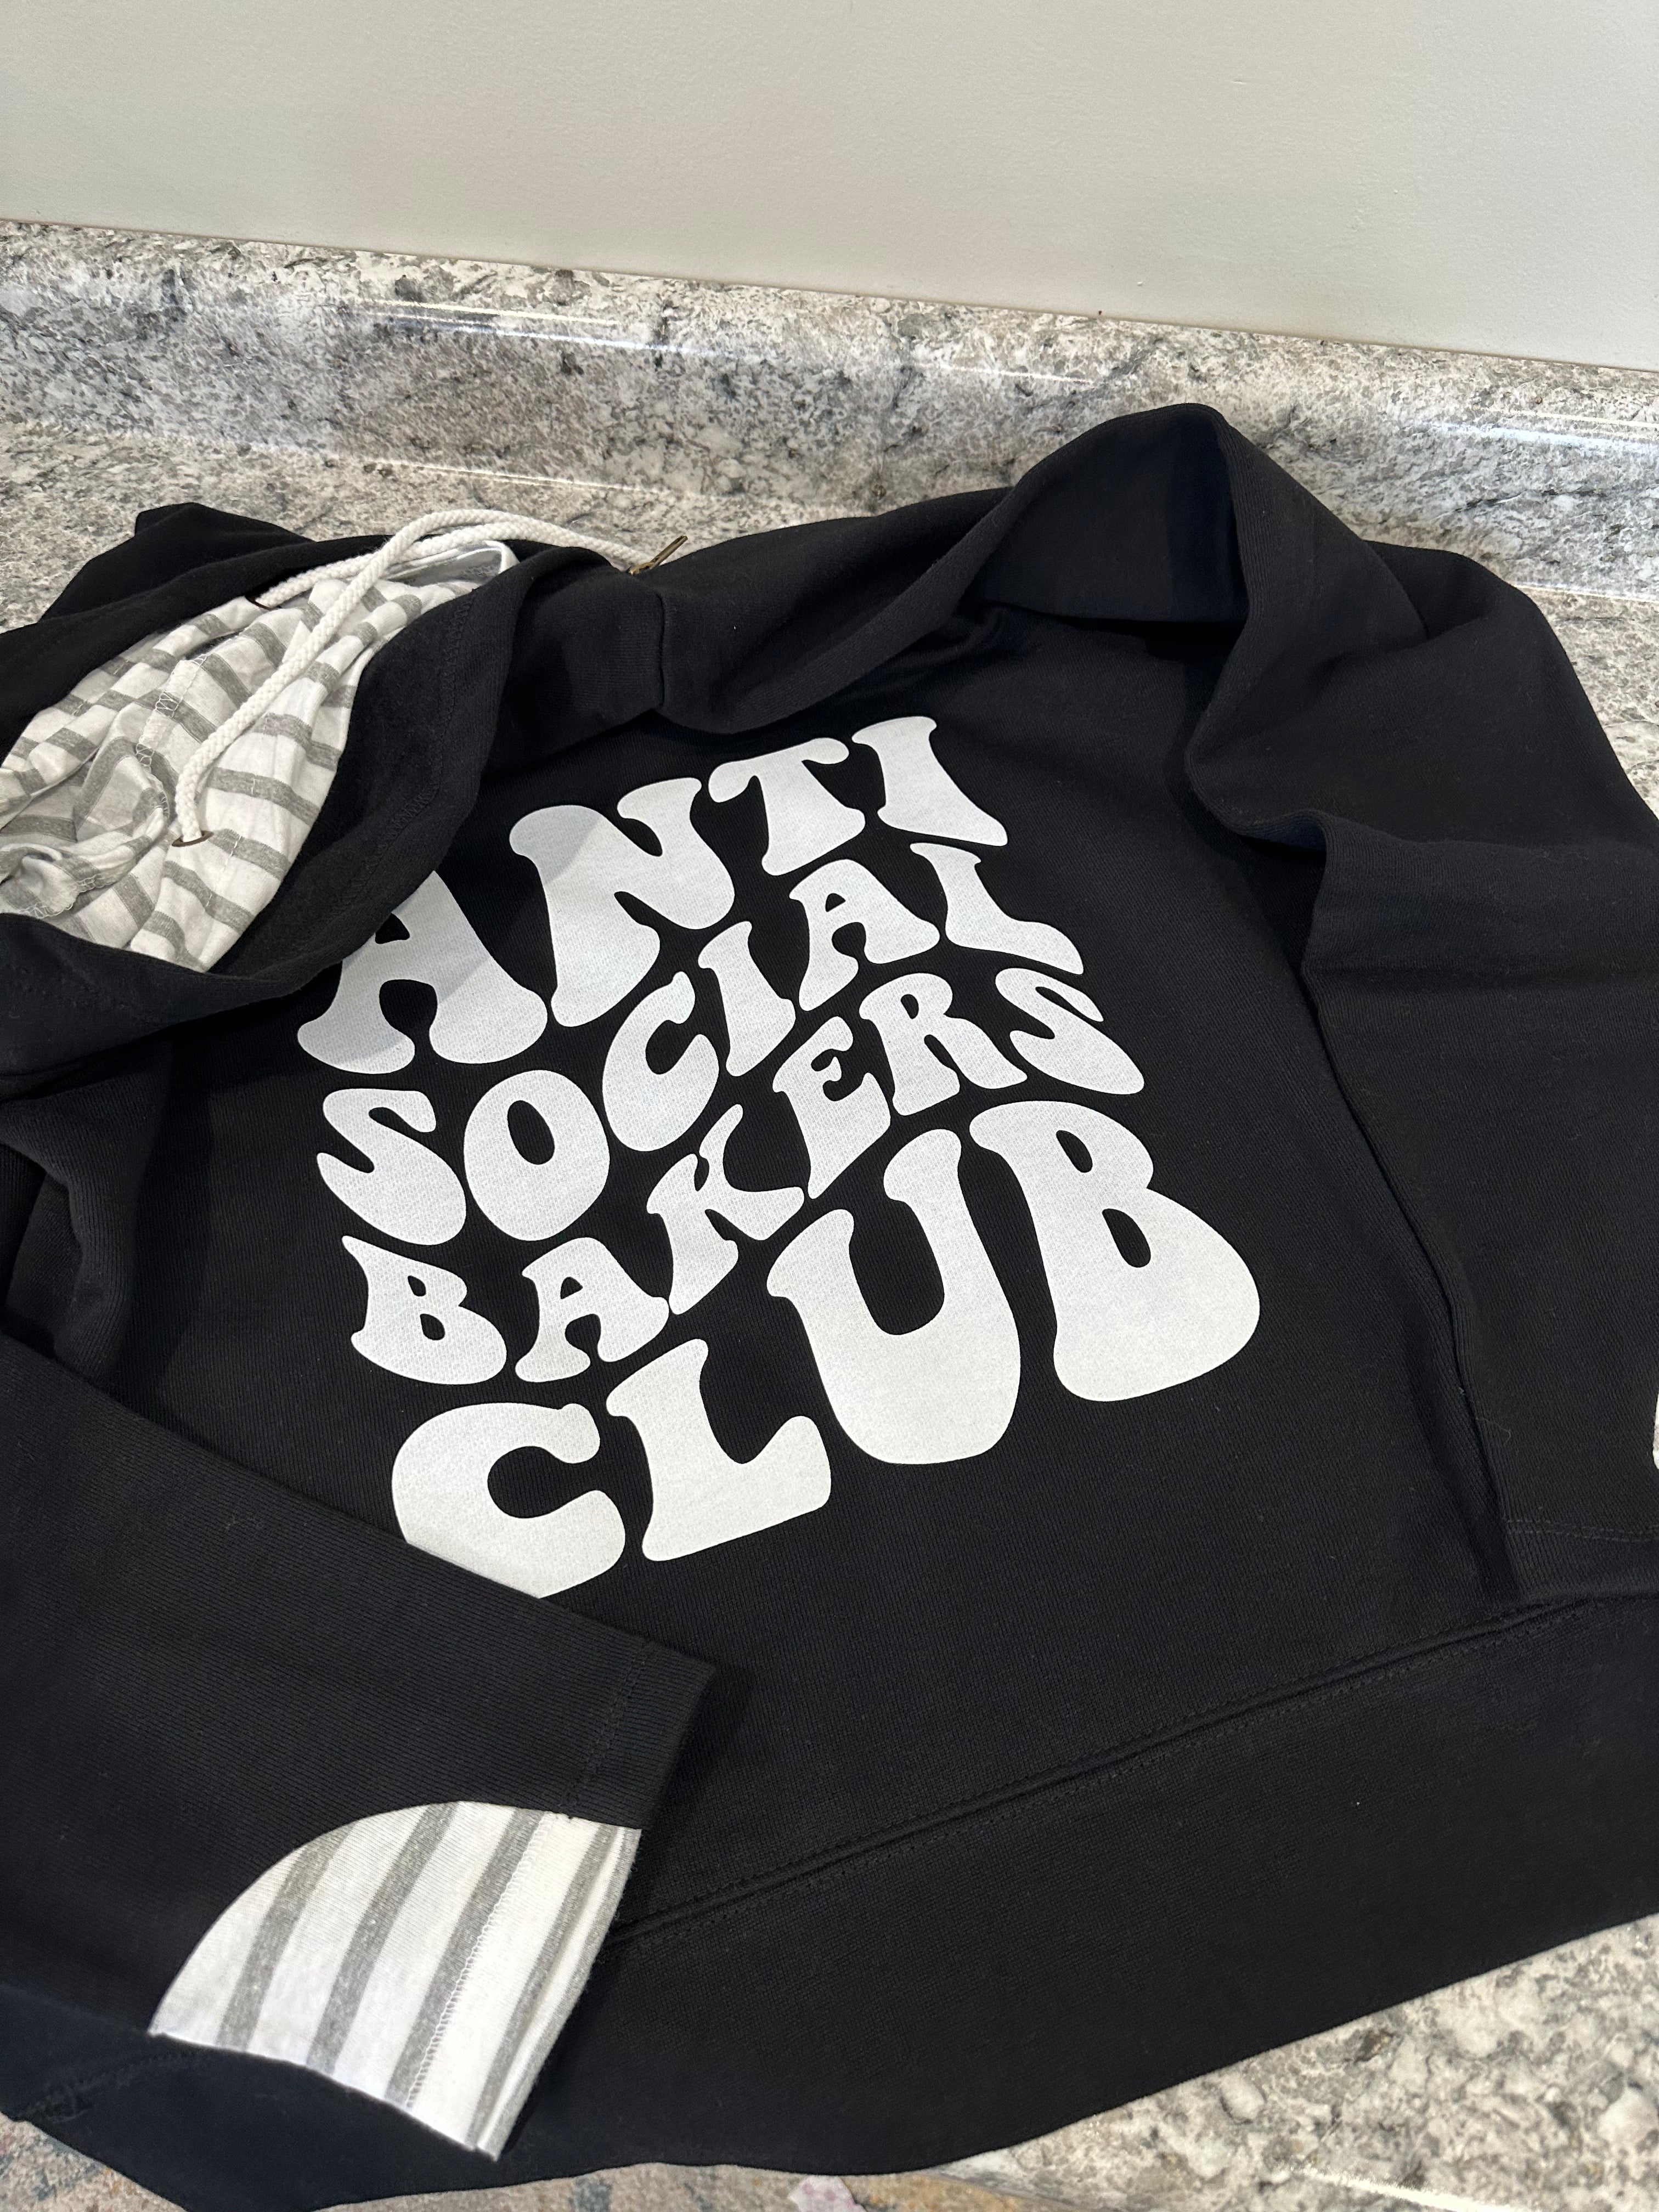 ANTI SOCIAL BAKERS CLUB cowl neck sweatshirt